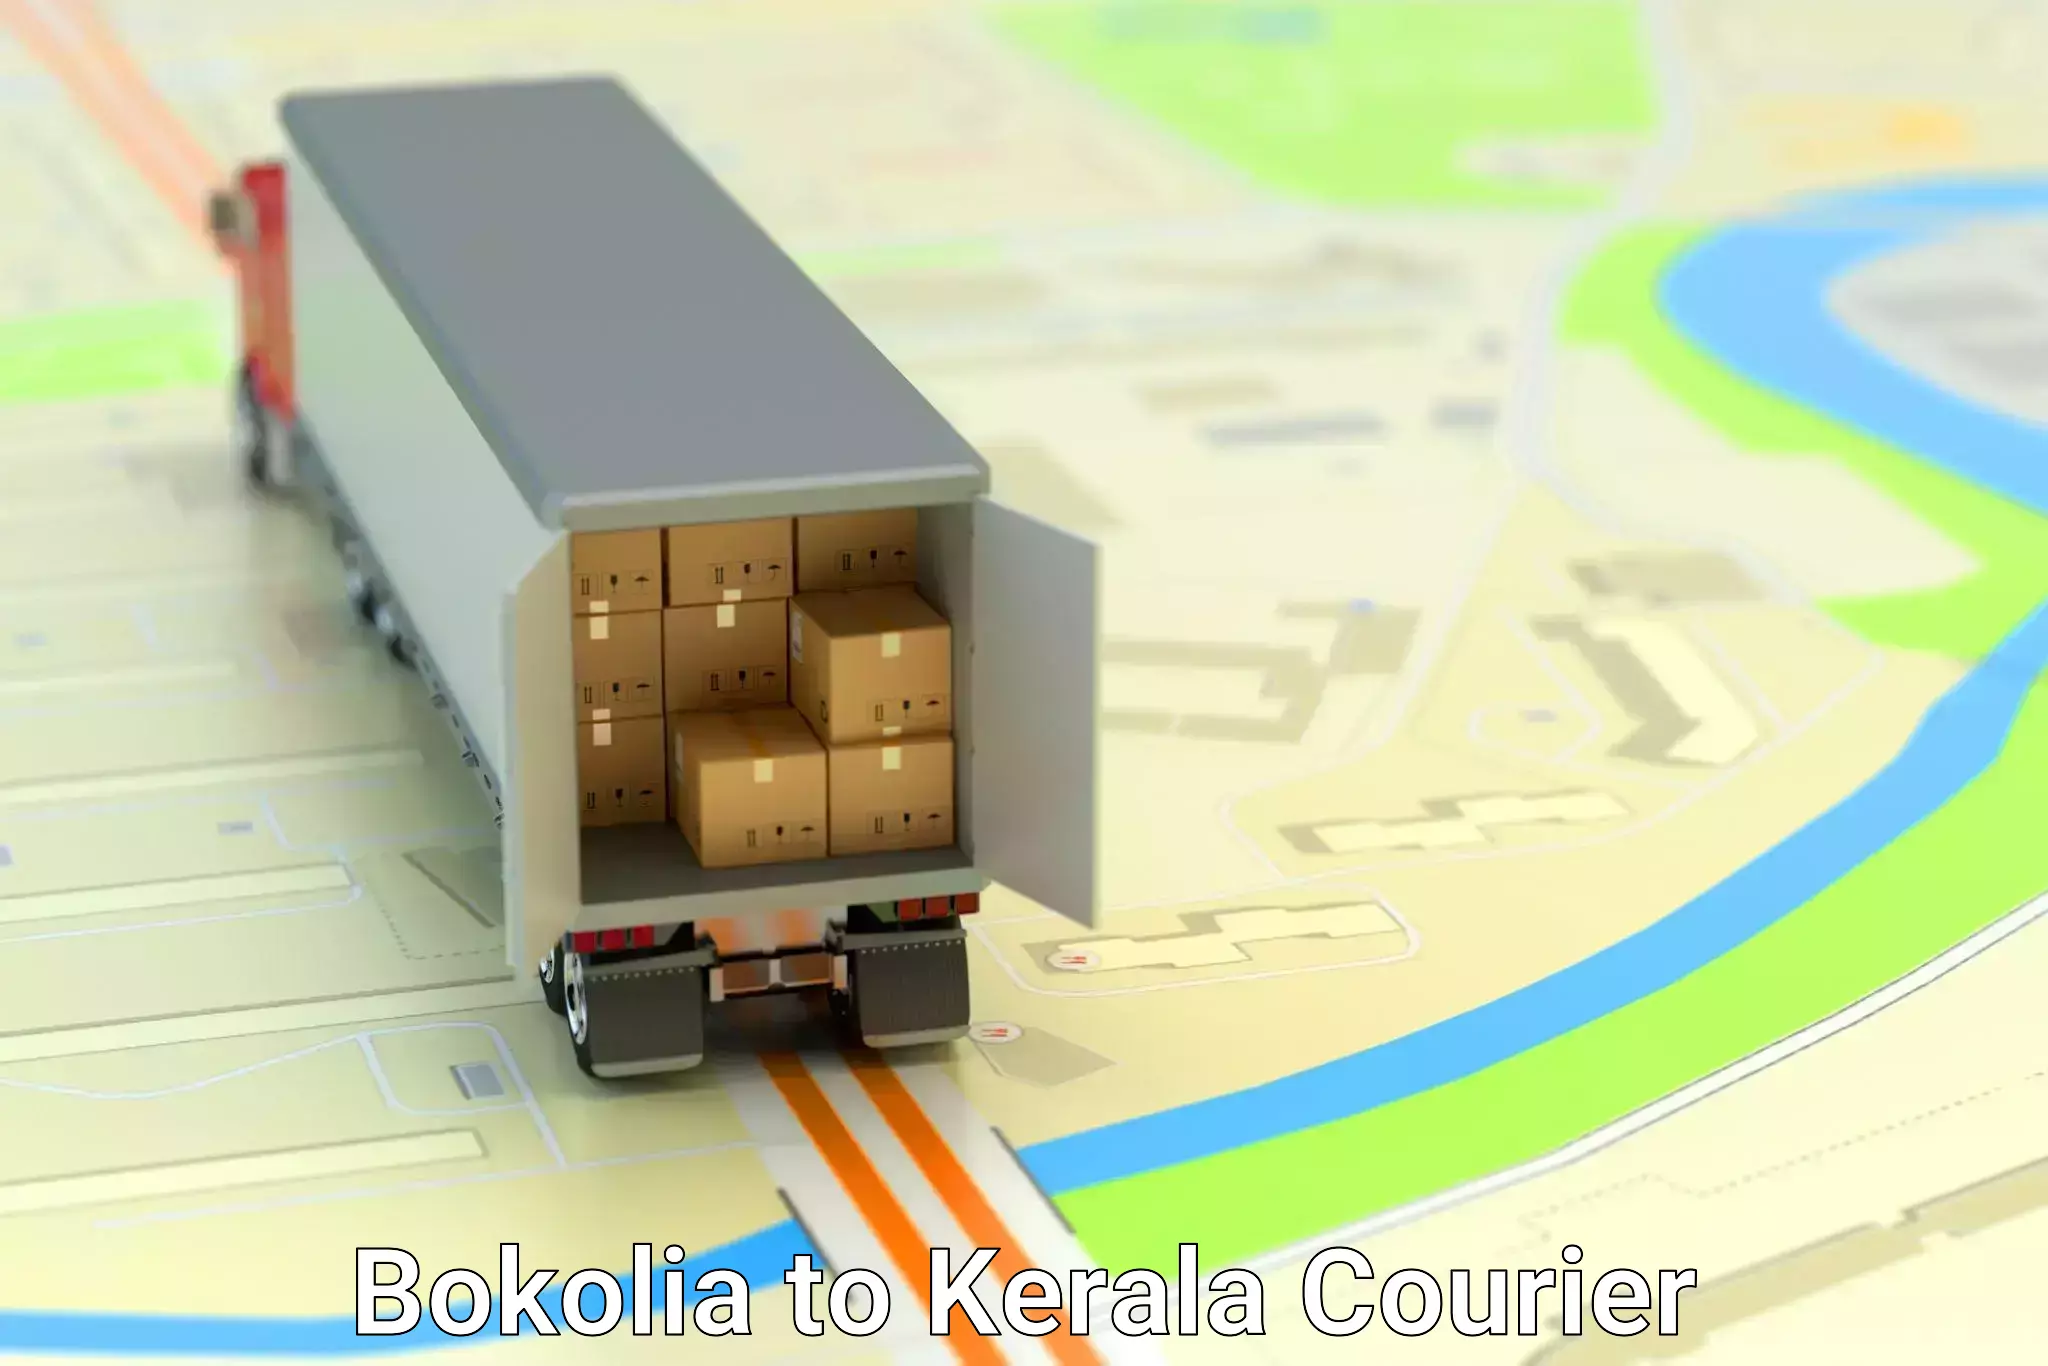 Logistics service provider Bokolia to Kerala